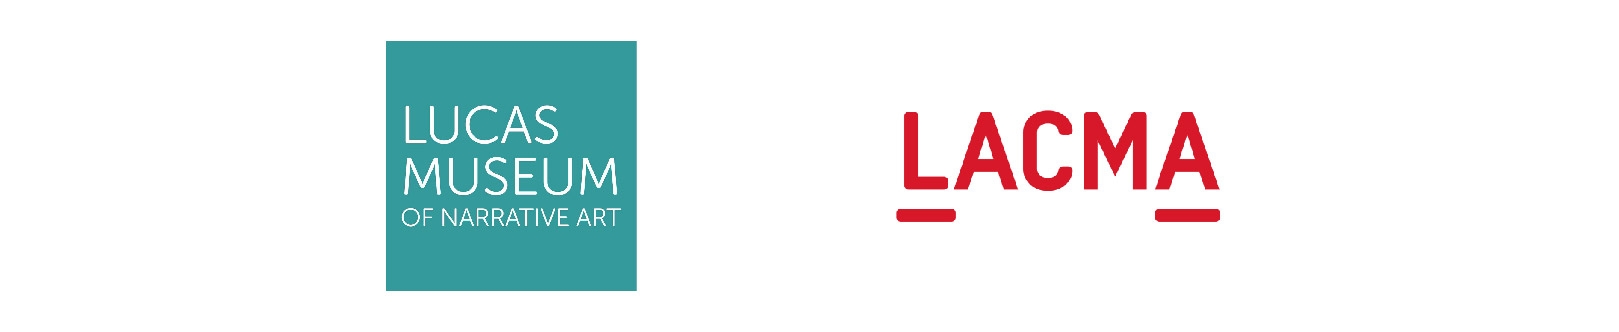 lucas-lacma-logos-01_200106_180508.jpg#asset:5786:url